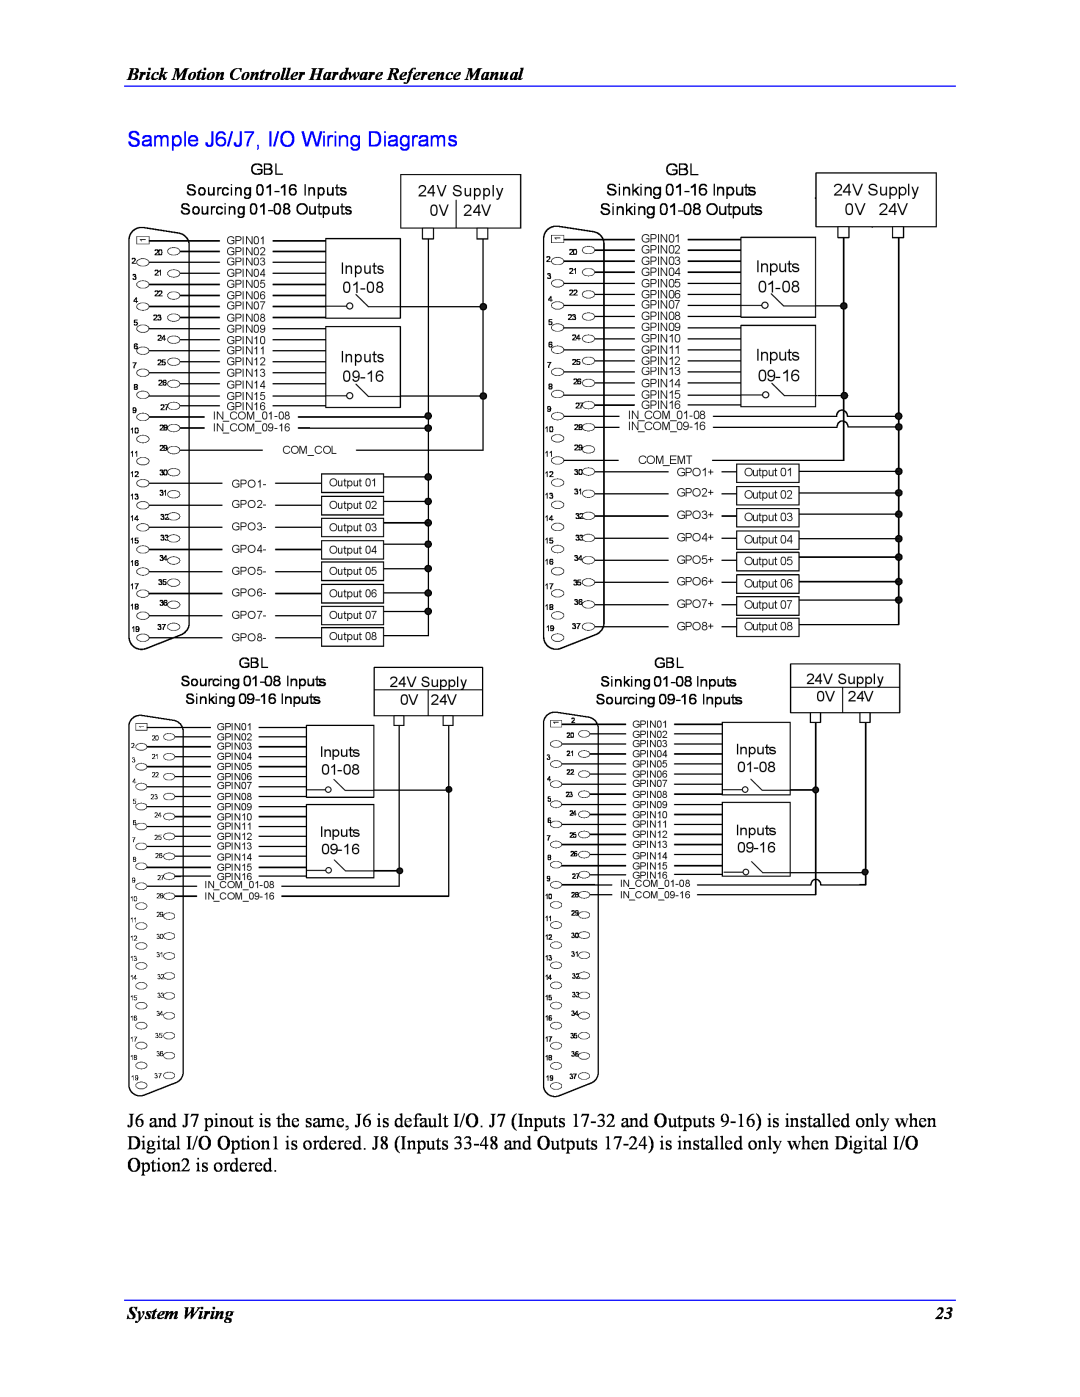 Delta Tau 5xx-603869-xUxx manual Sample J6/J7, I/O Wiring Diagrams, Brick Motion Controller Hardware Reference Manual 